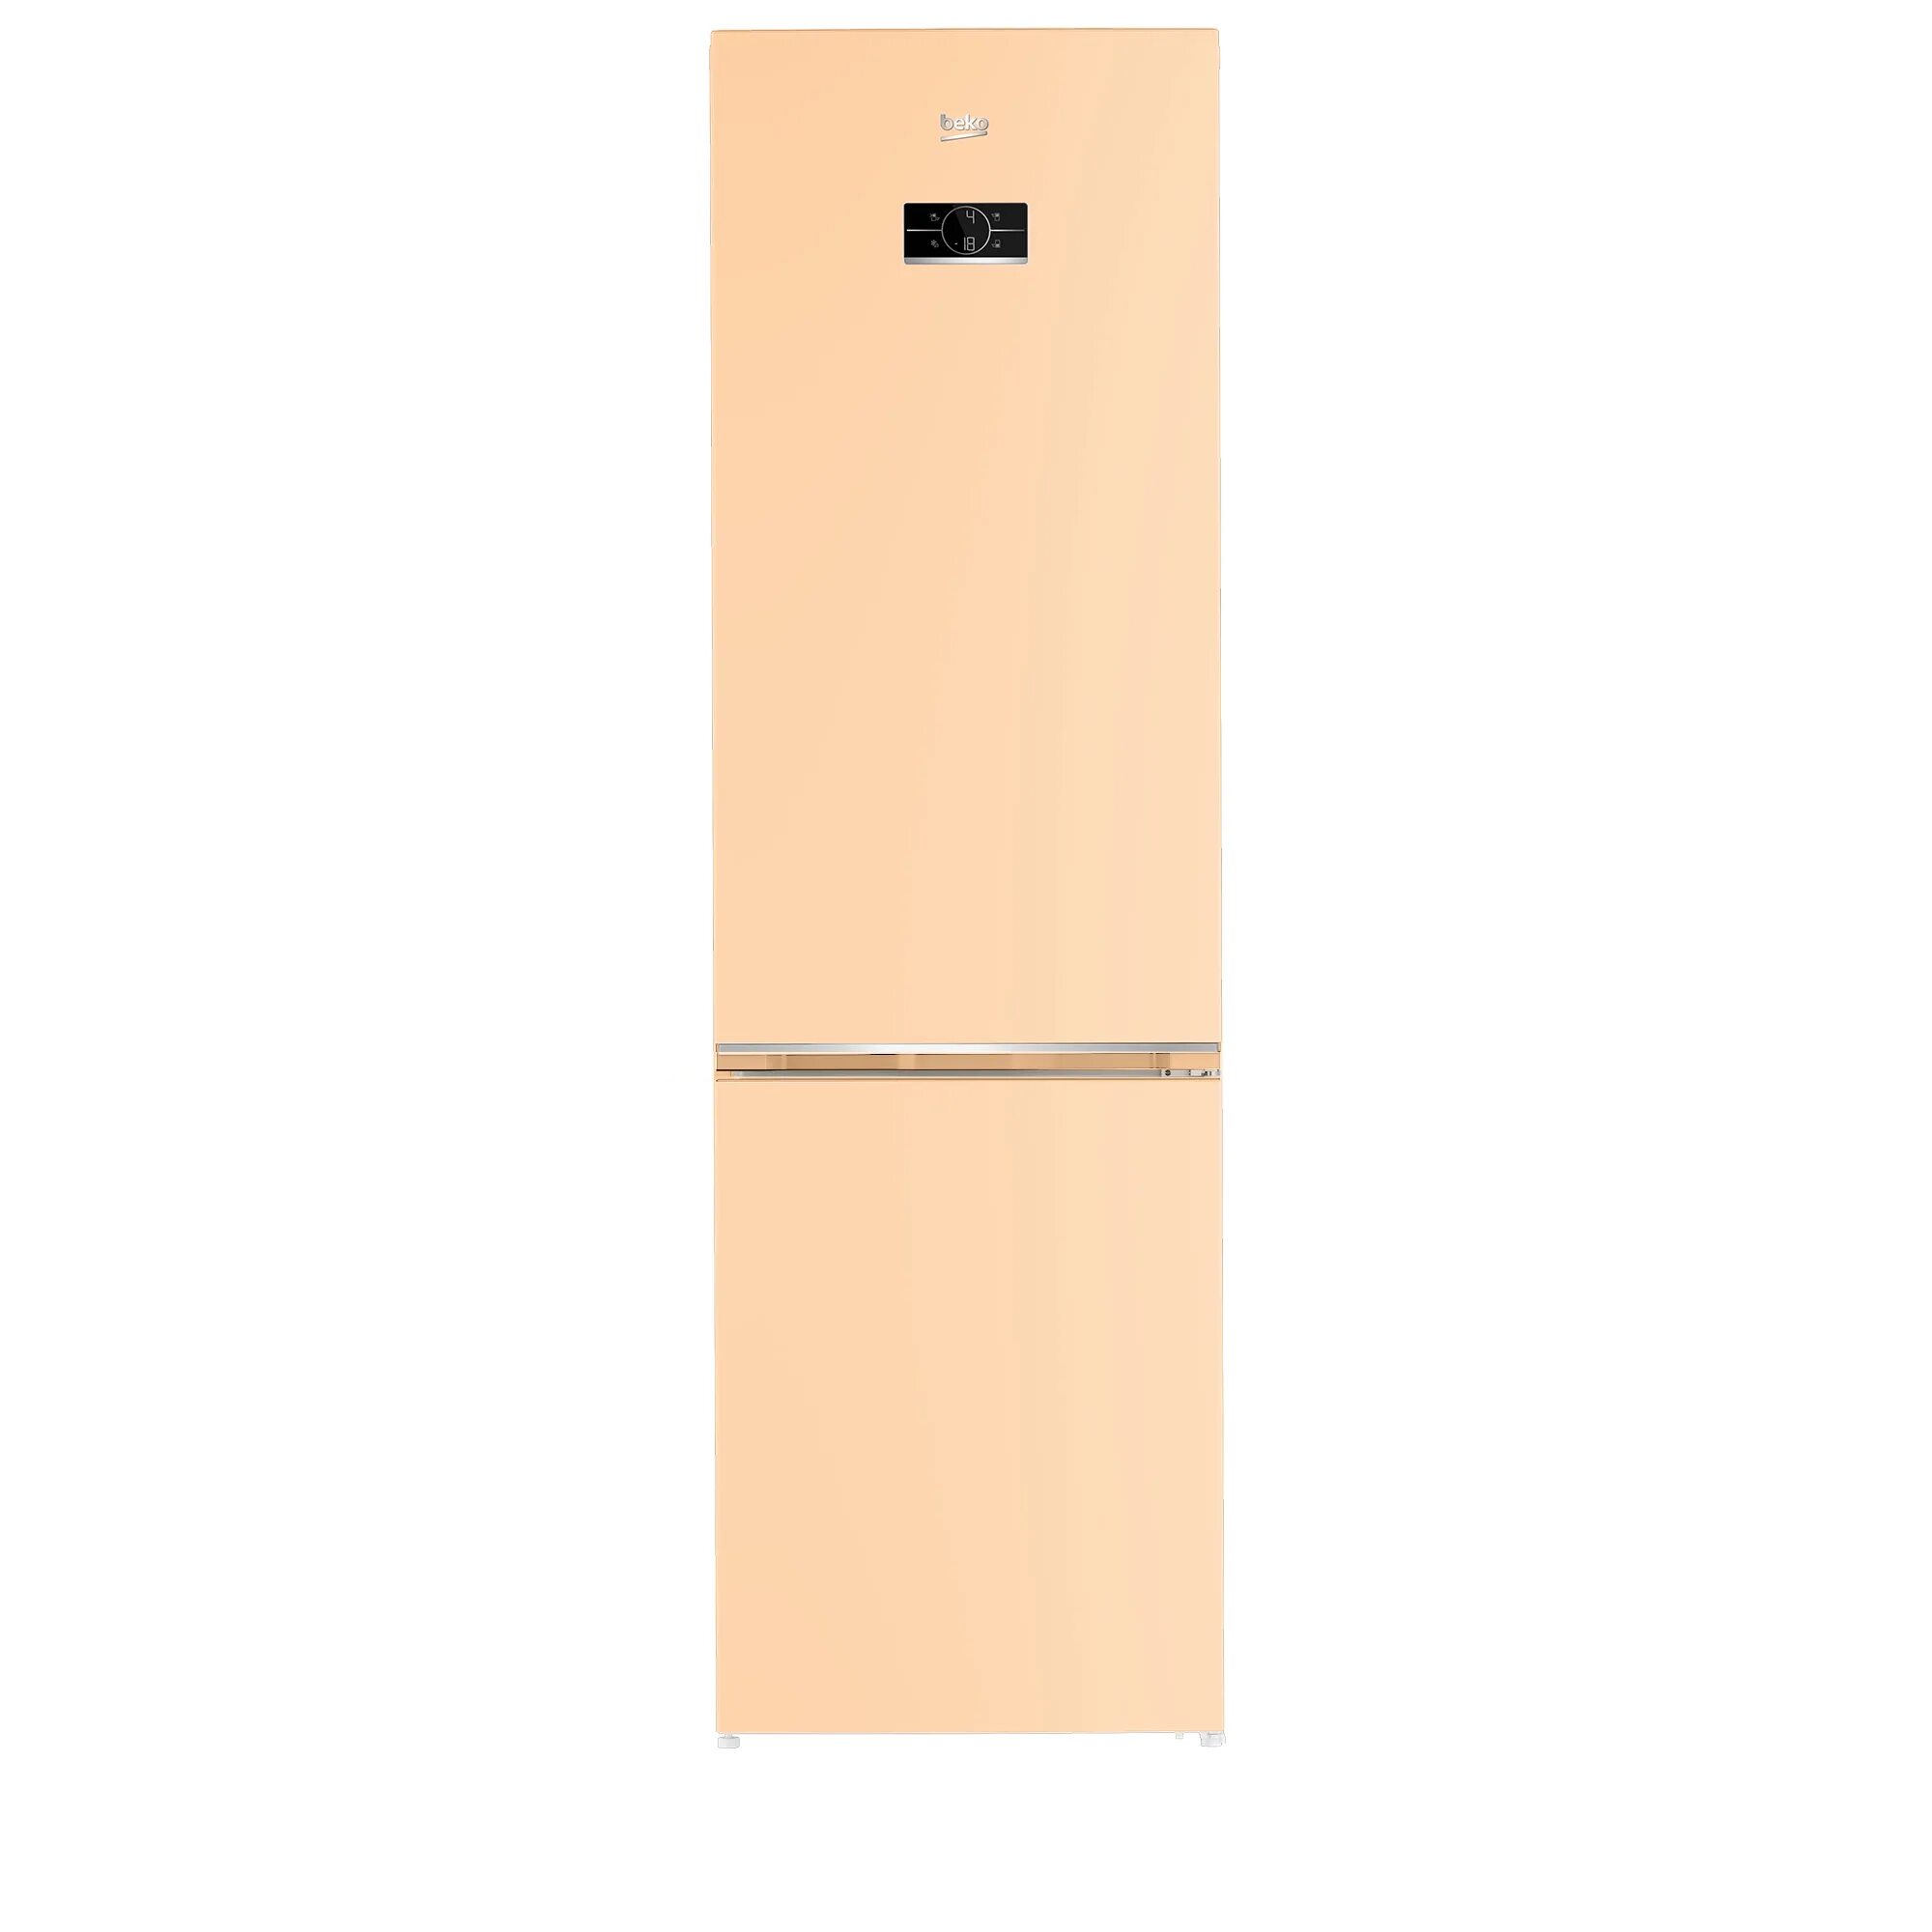 Узкие холодильники до 55 см. Холодильник LG 509 cetl. Холодильник Jacky's Jr fv1860. Bosch kgn36nk21r. Холодильник Jacky's Jr fs227ms.